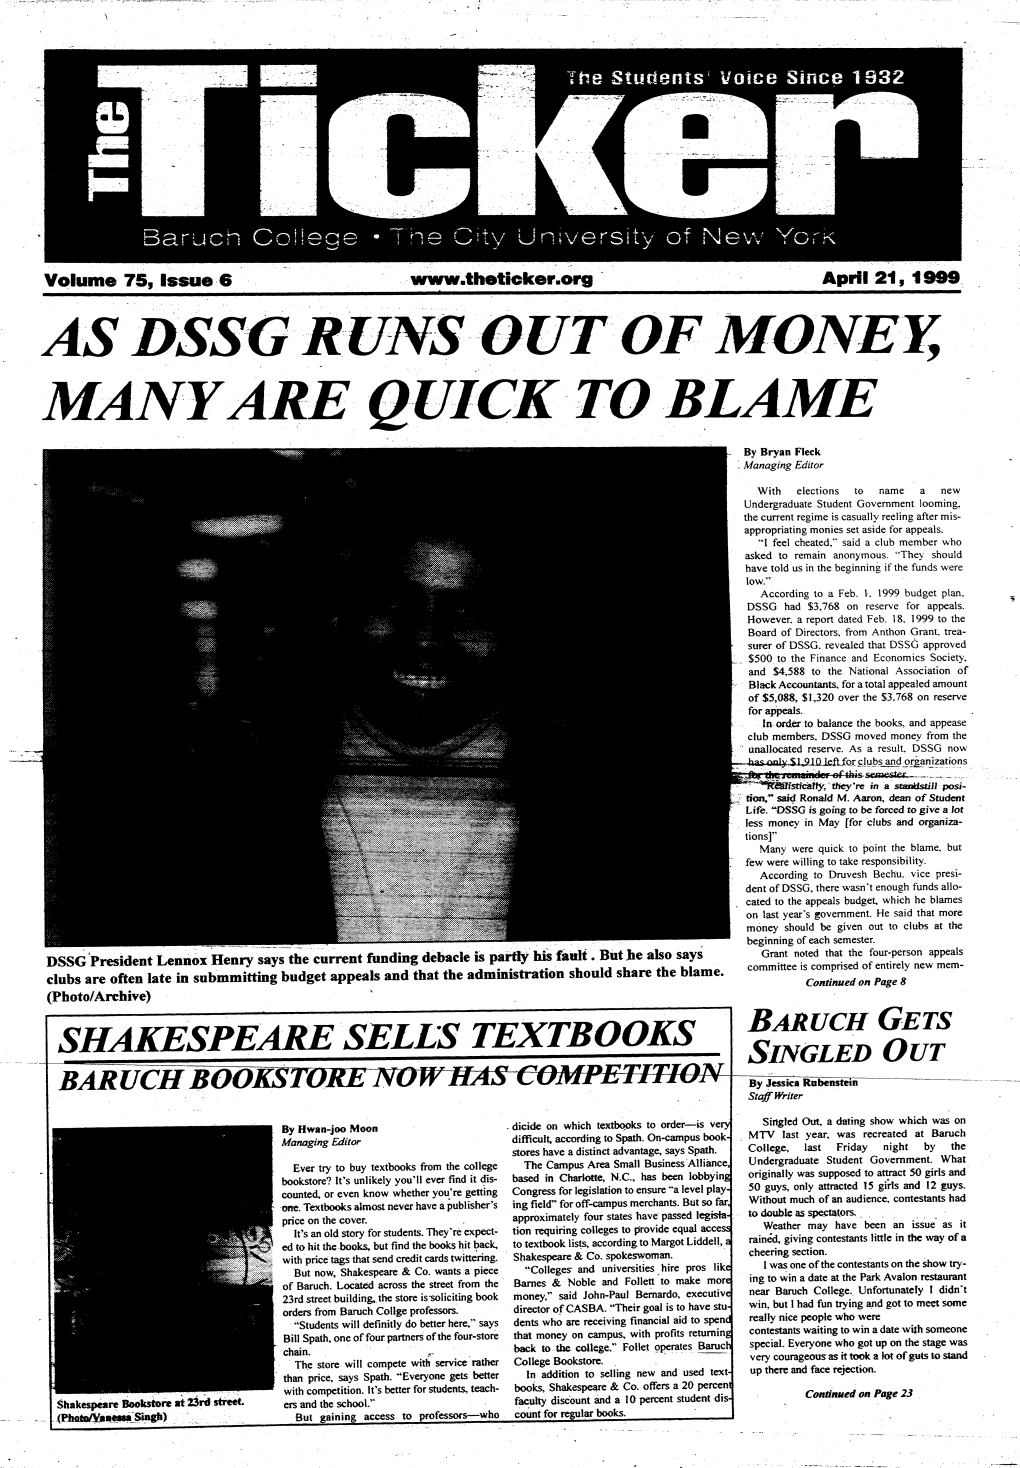 The Ticker, April 21, 1999